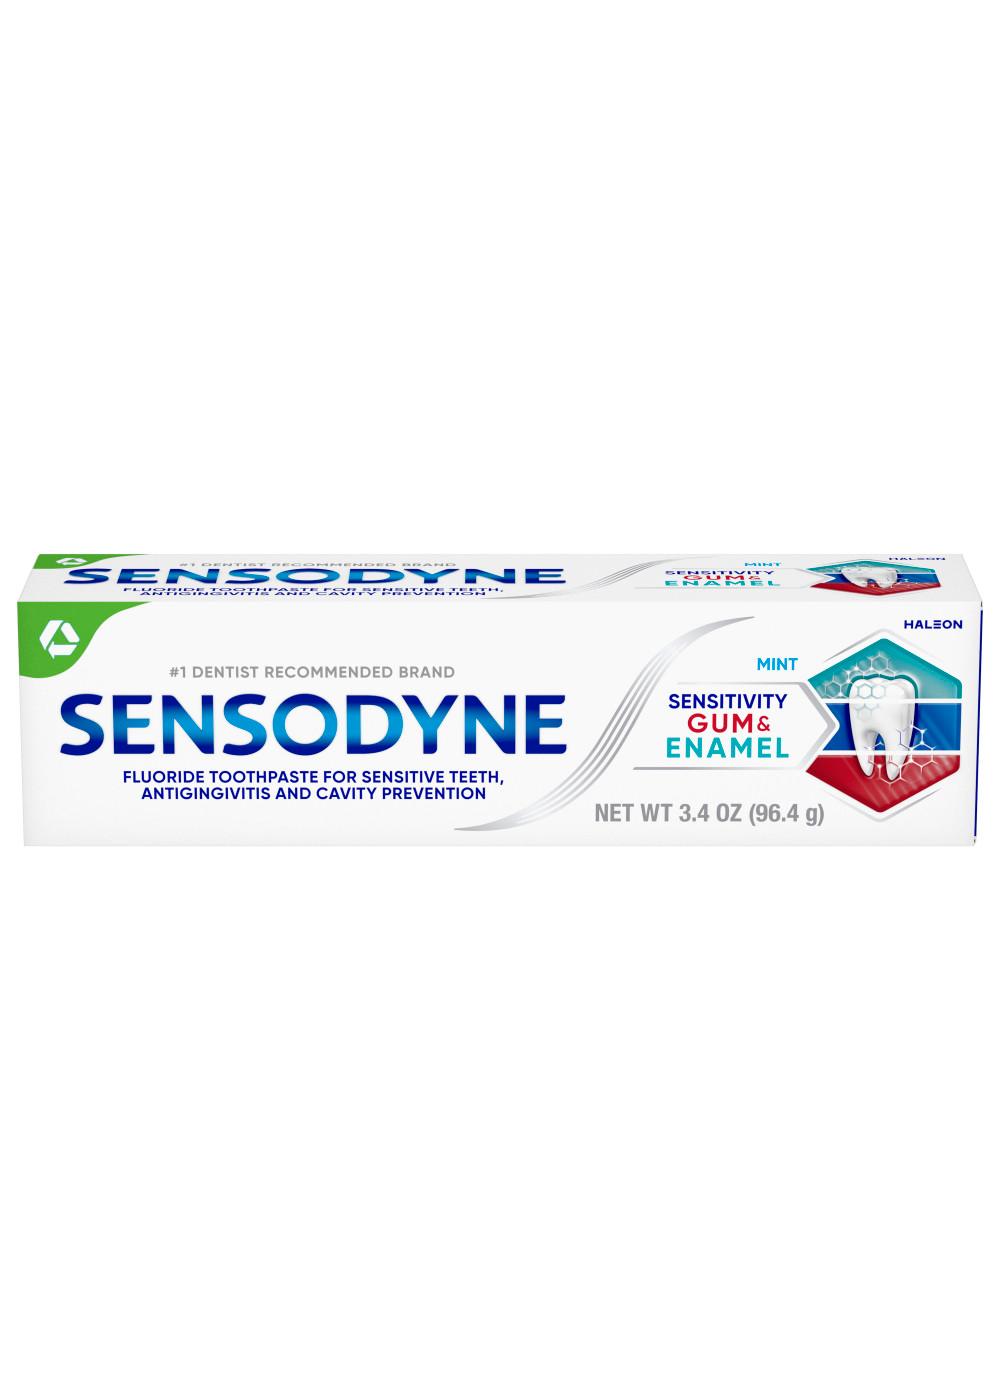 Sensodyne Sensitivity Gum & Enamel Fluoride Toothpaste - Mint; image 1 of 10